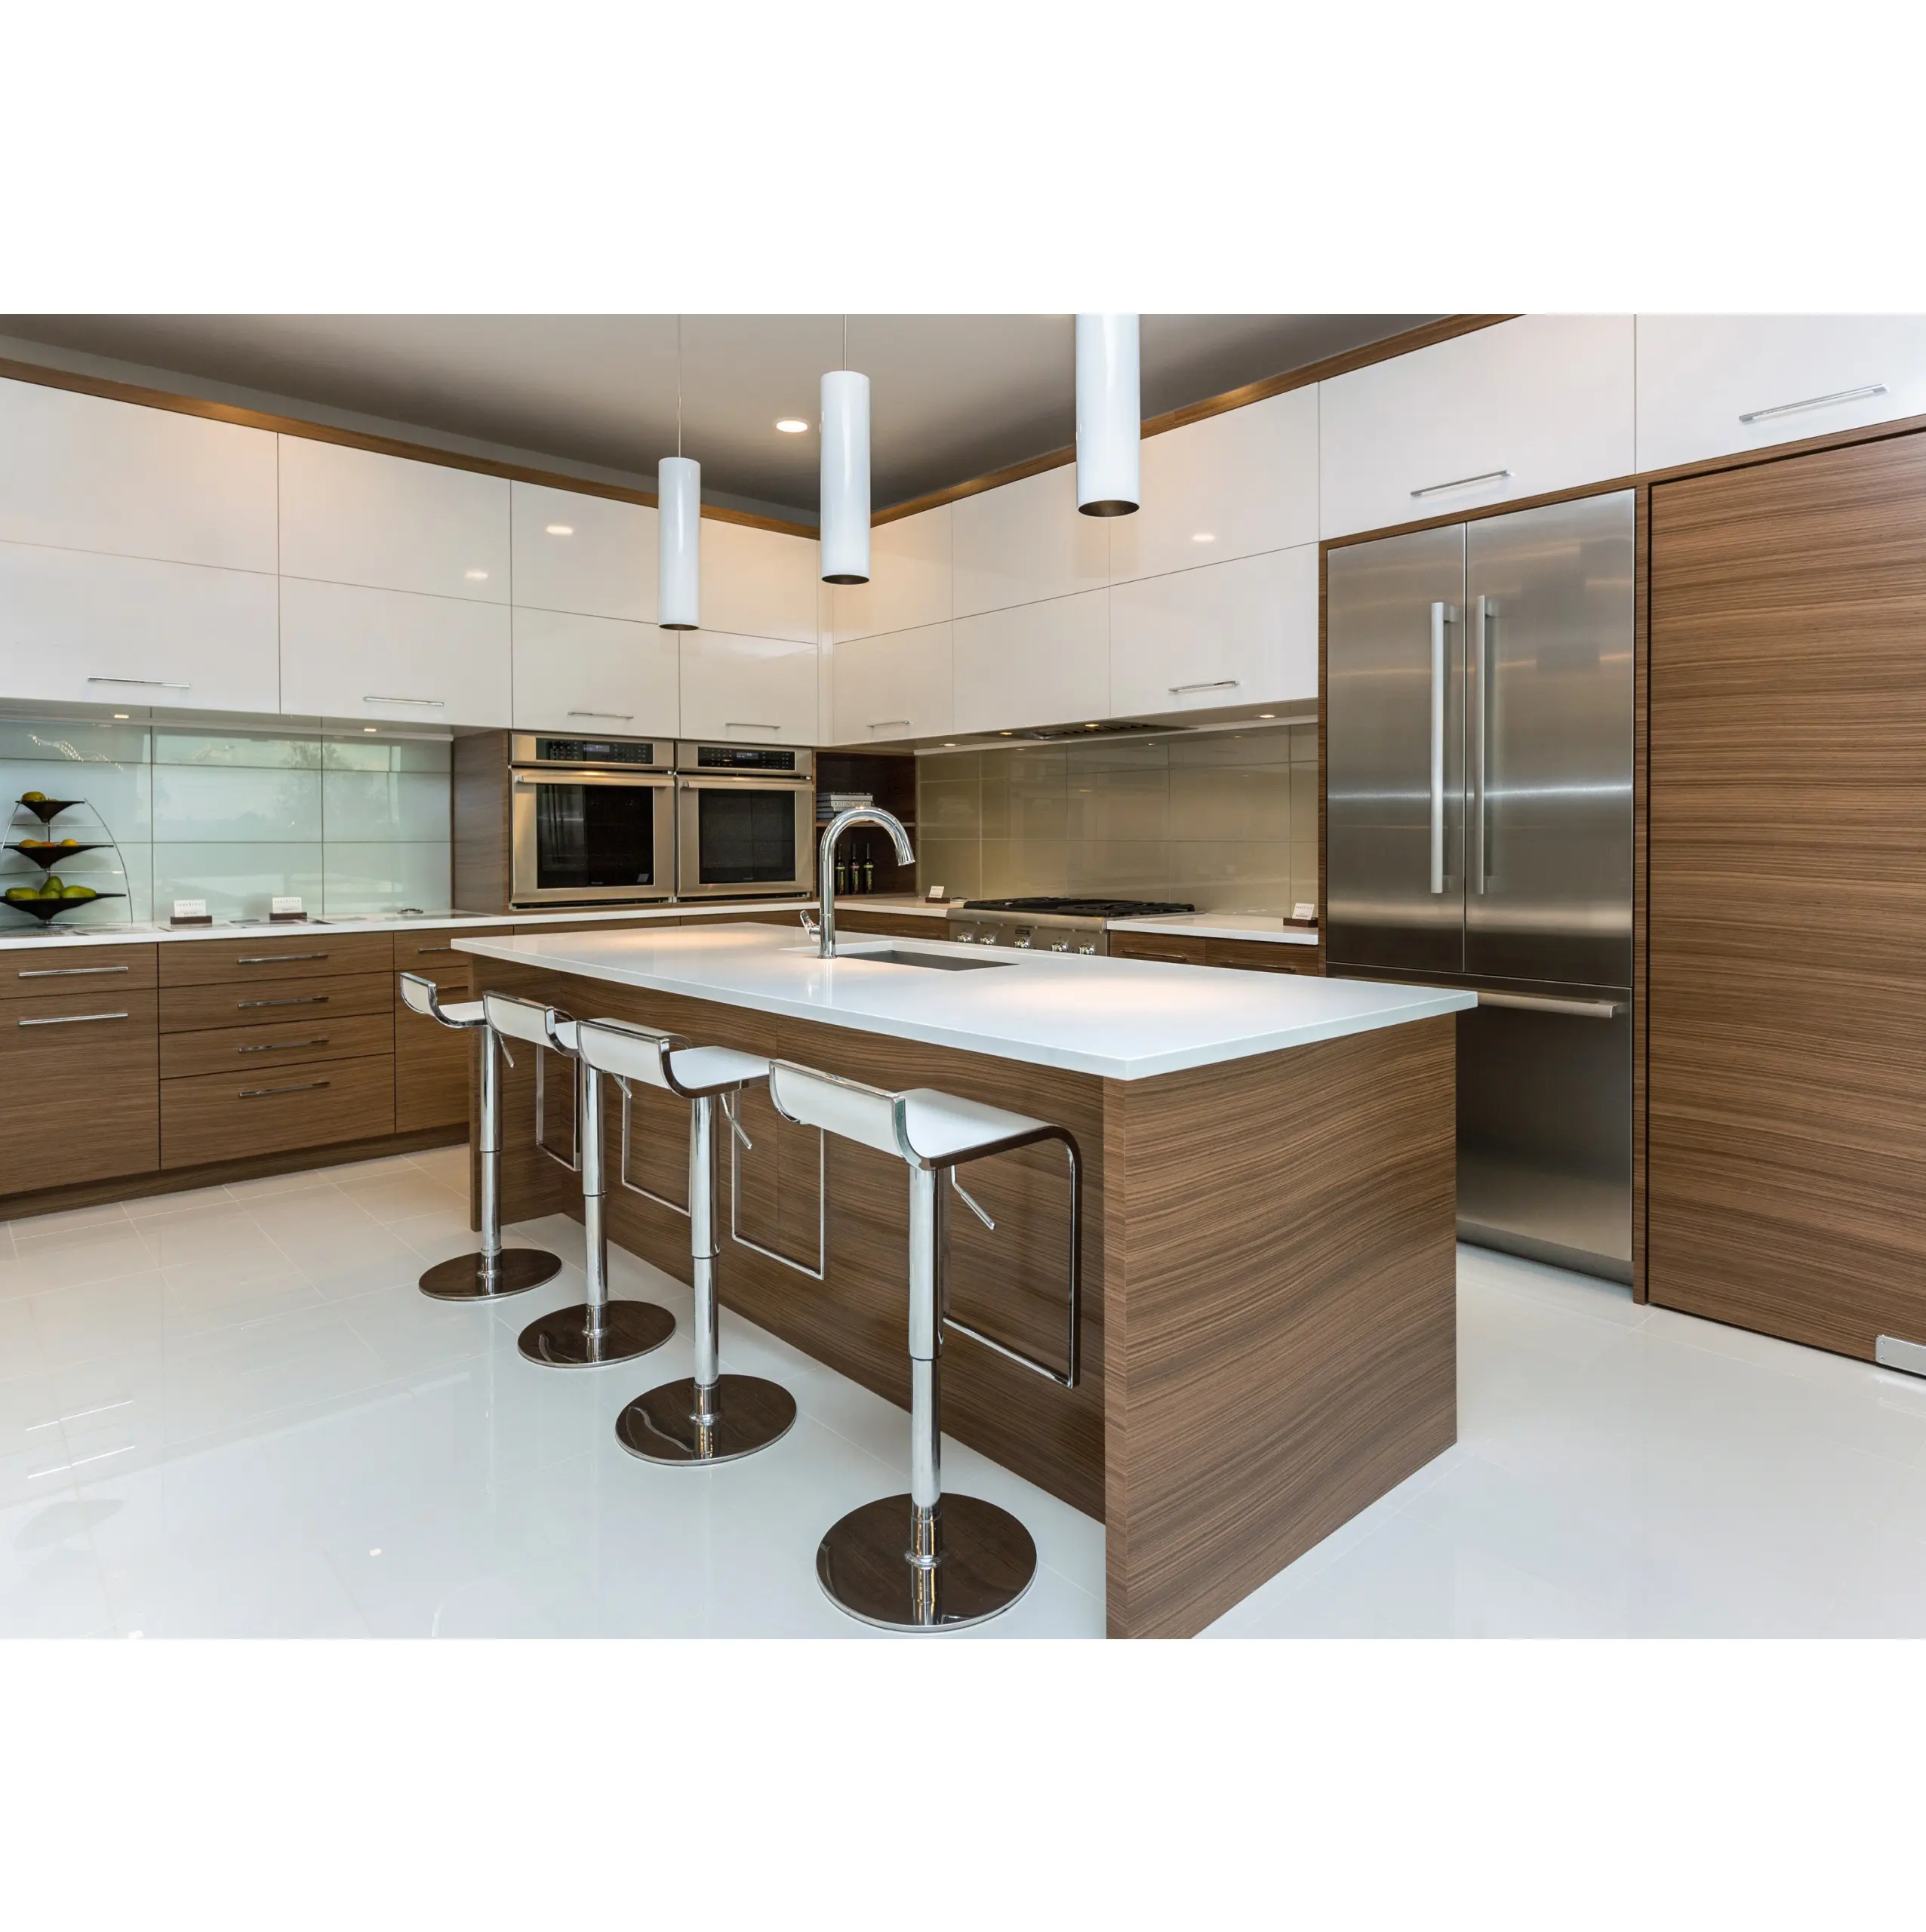 CBMmart promotion modern open kitchen wood kitchen cabinets with islands